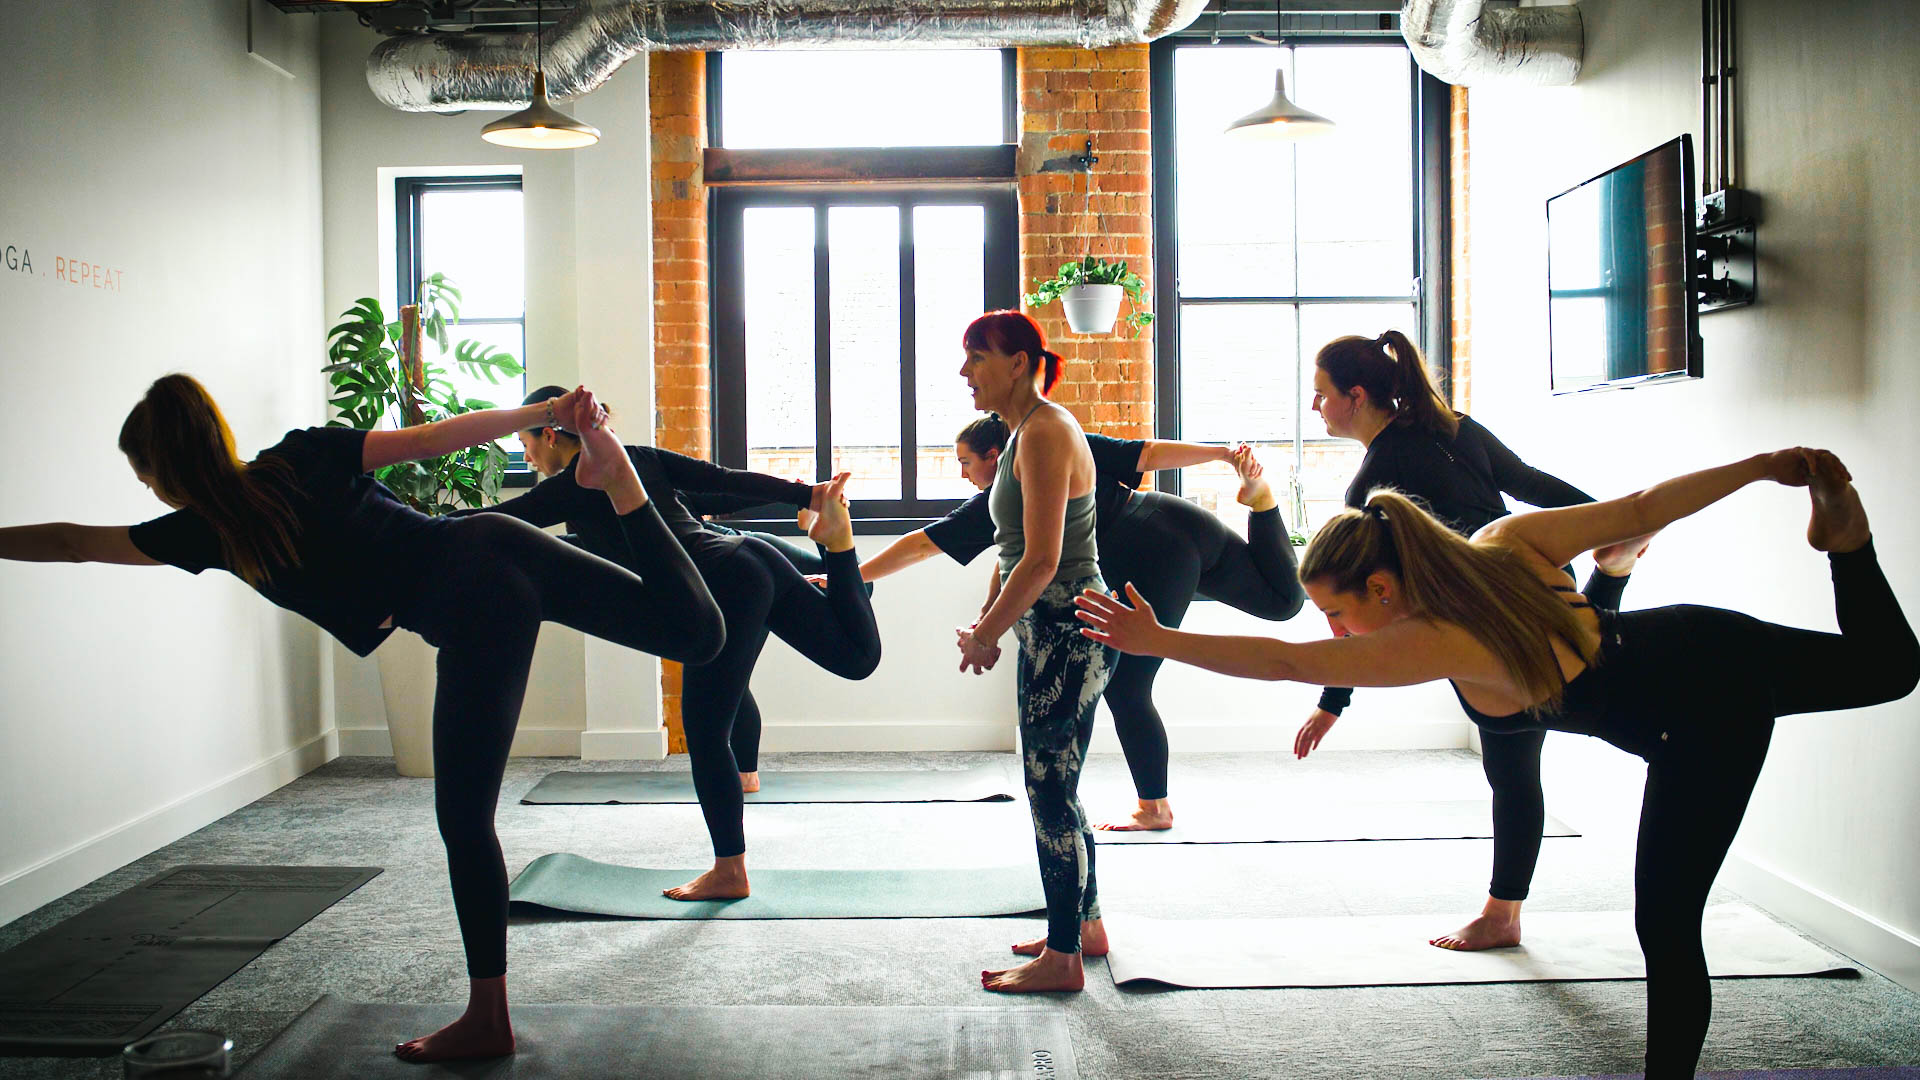 Photograph of Carolyn Collinson teaching a yoga class in the EMEA Recruitment office